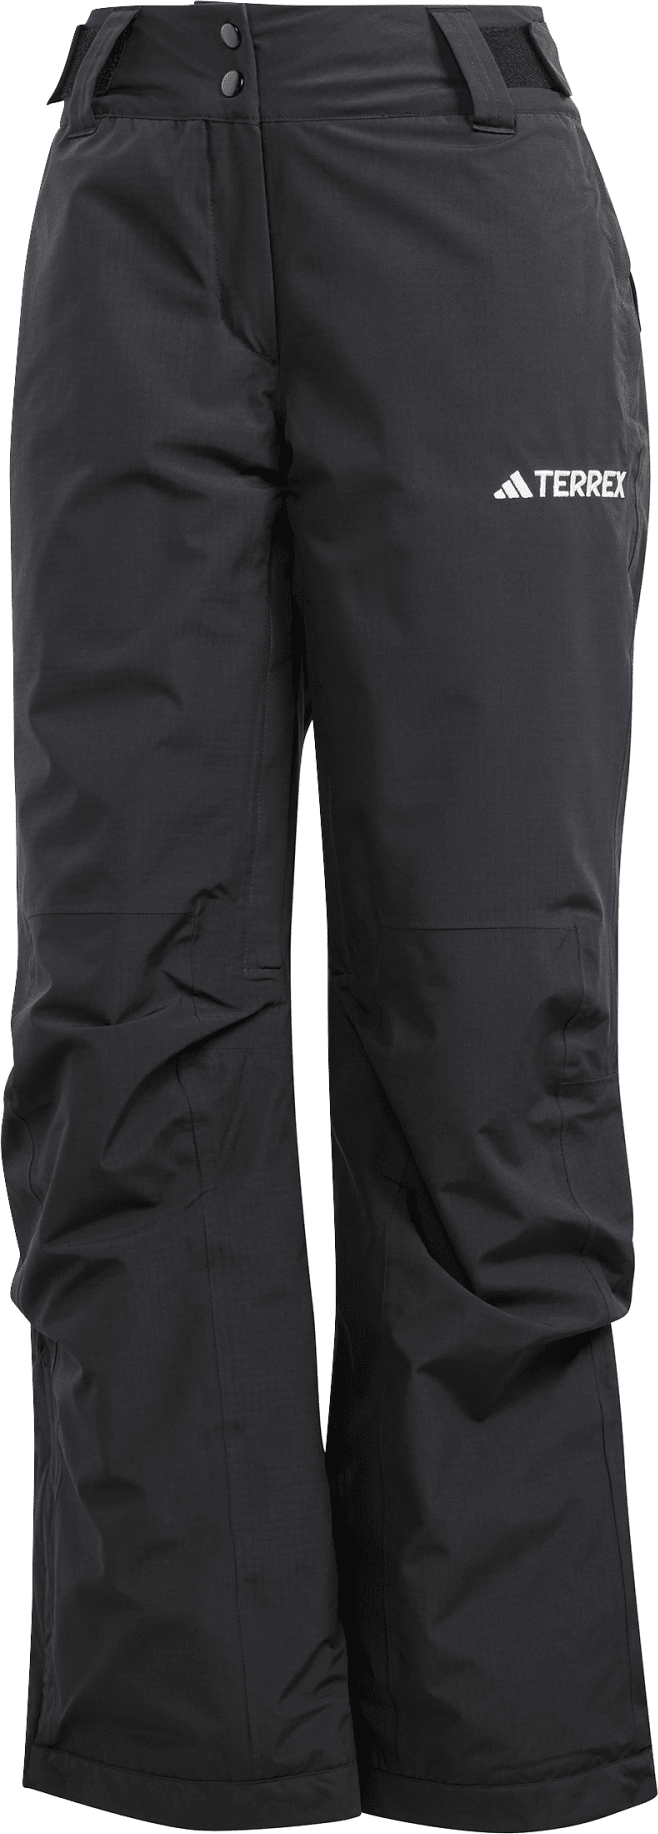 Women's Alpine Insulated Pant Black | Buy Women's Alpine Insulated